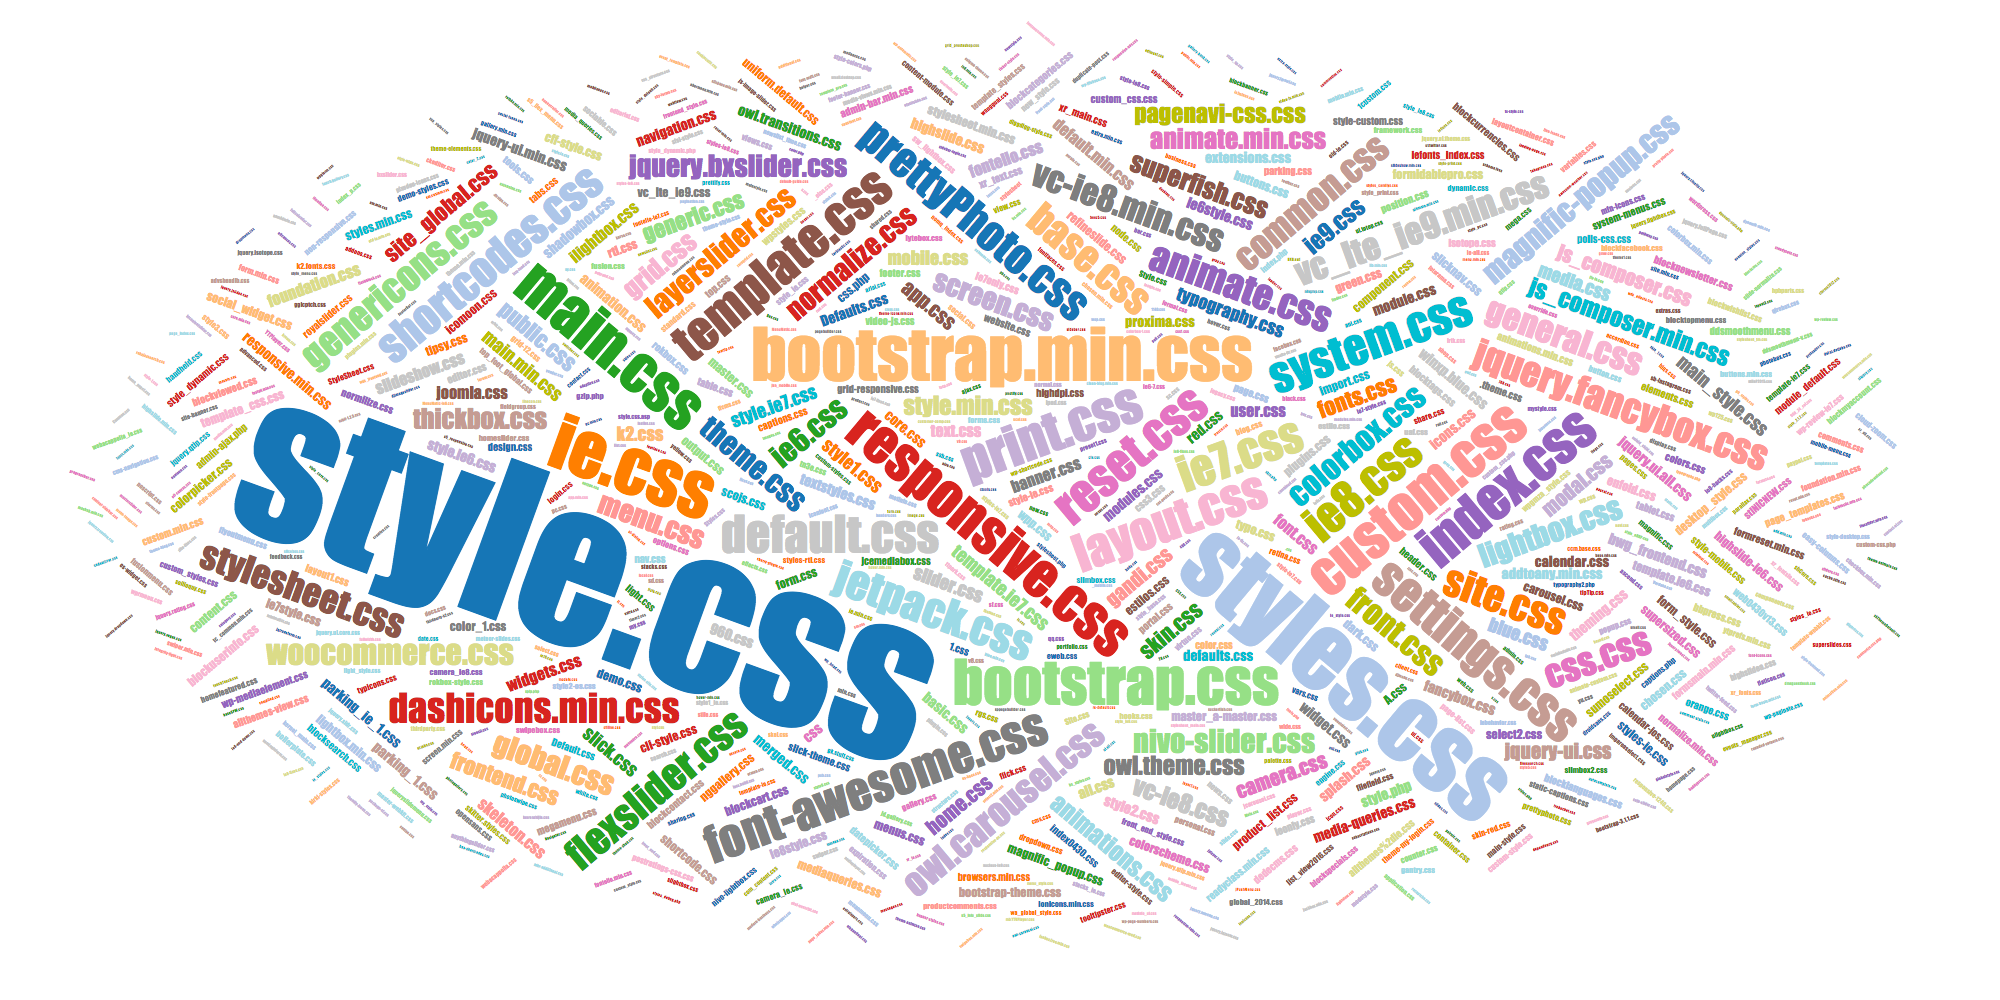 Popular names of CSS files main.css, magnific-popup.css, etc.